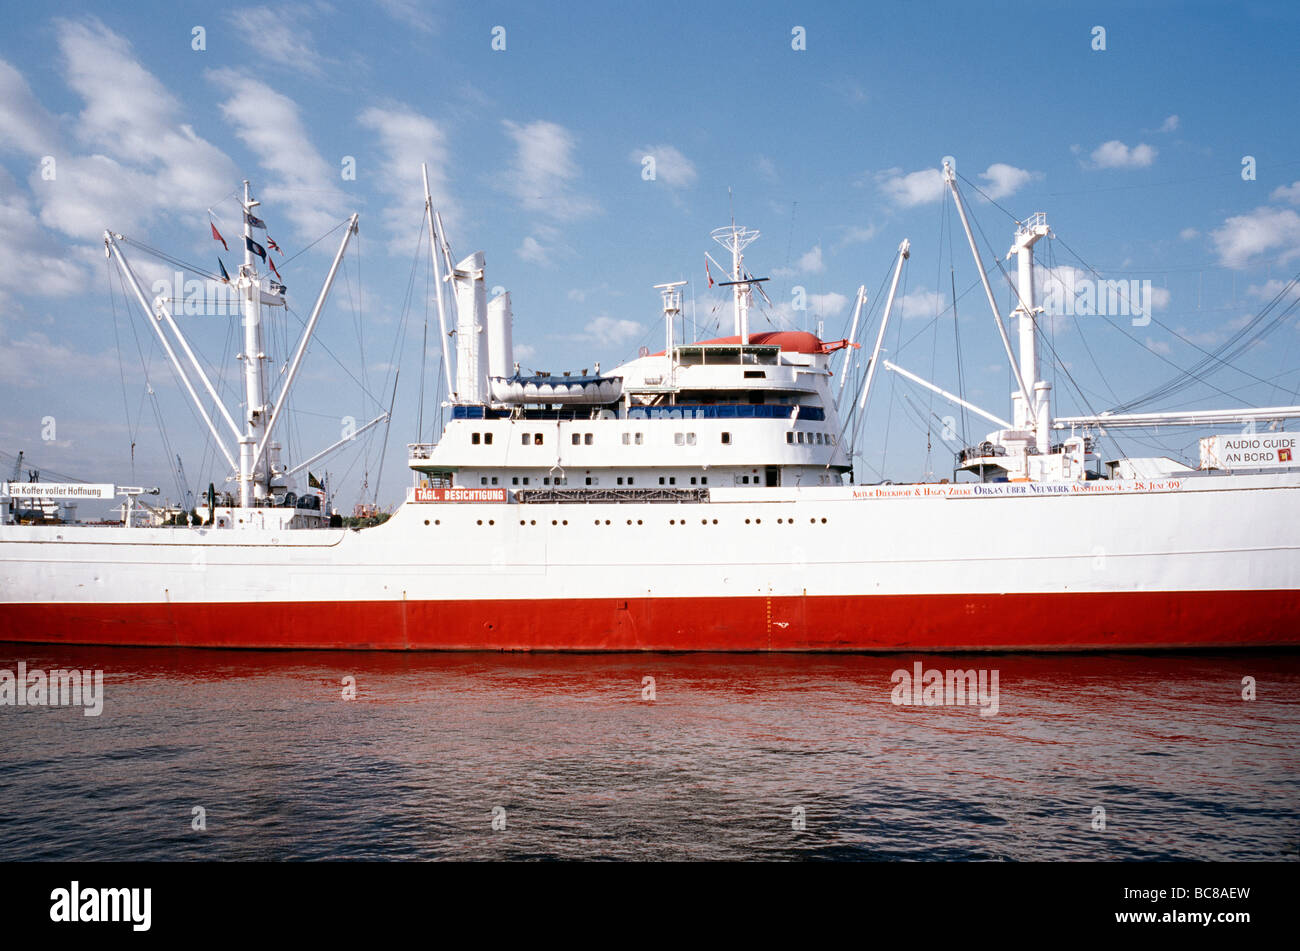 June 25, 2009 - Starboard view of museum ship Cap San Diego at Vorsetzen in the German port of Hamburg. Stock Photo